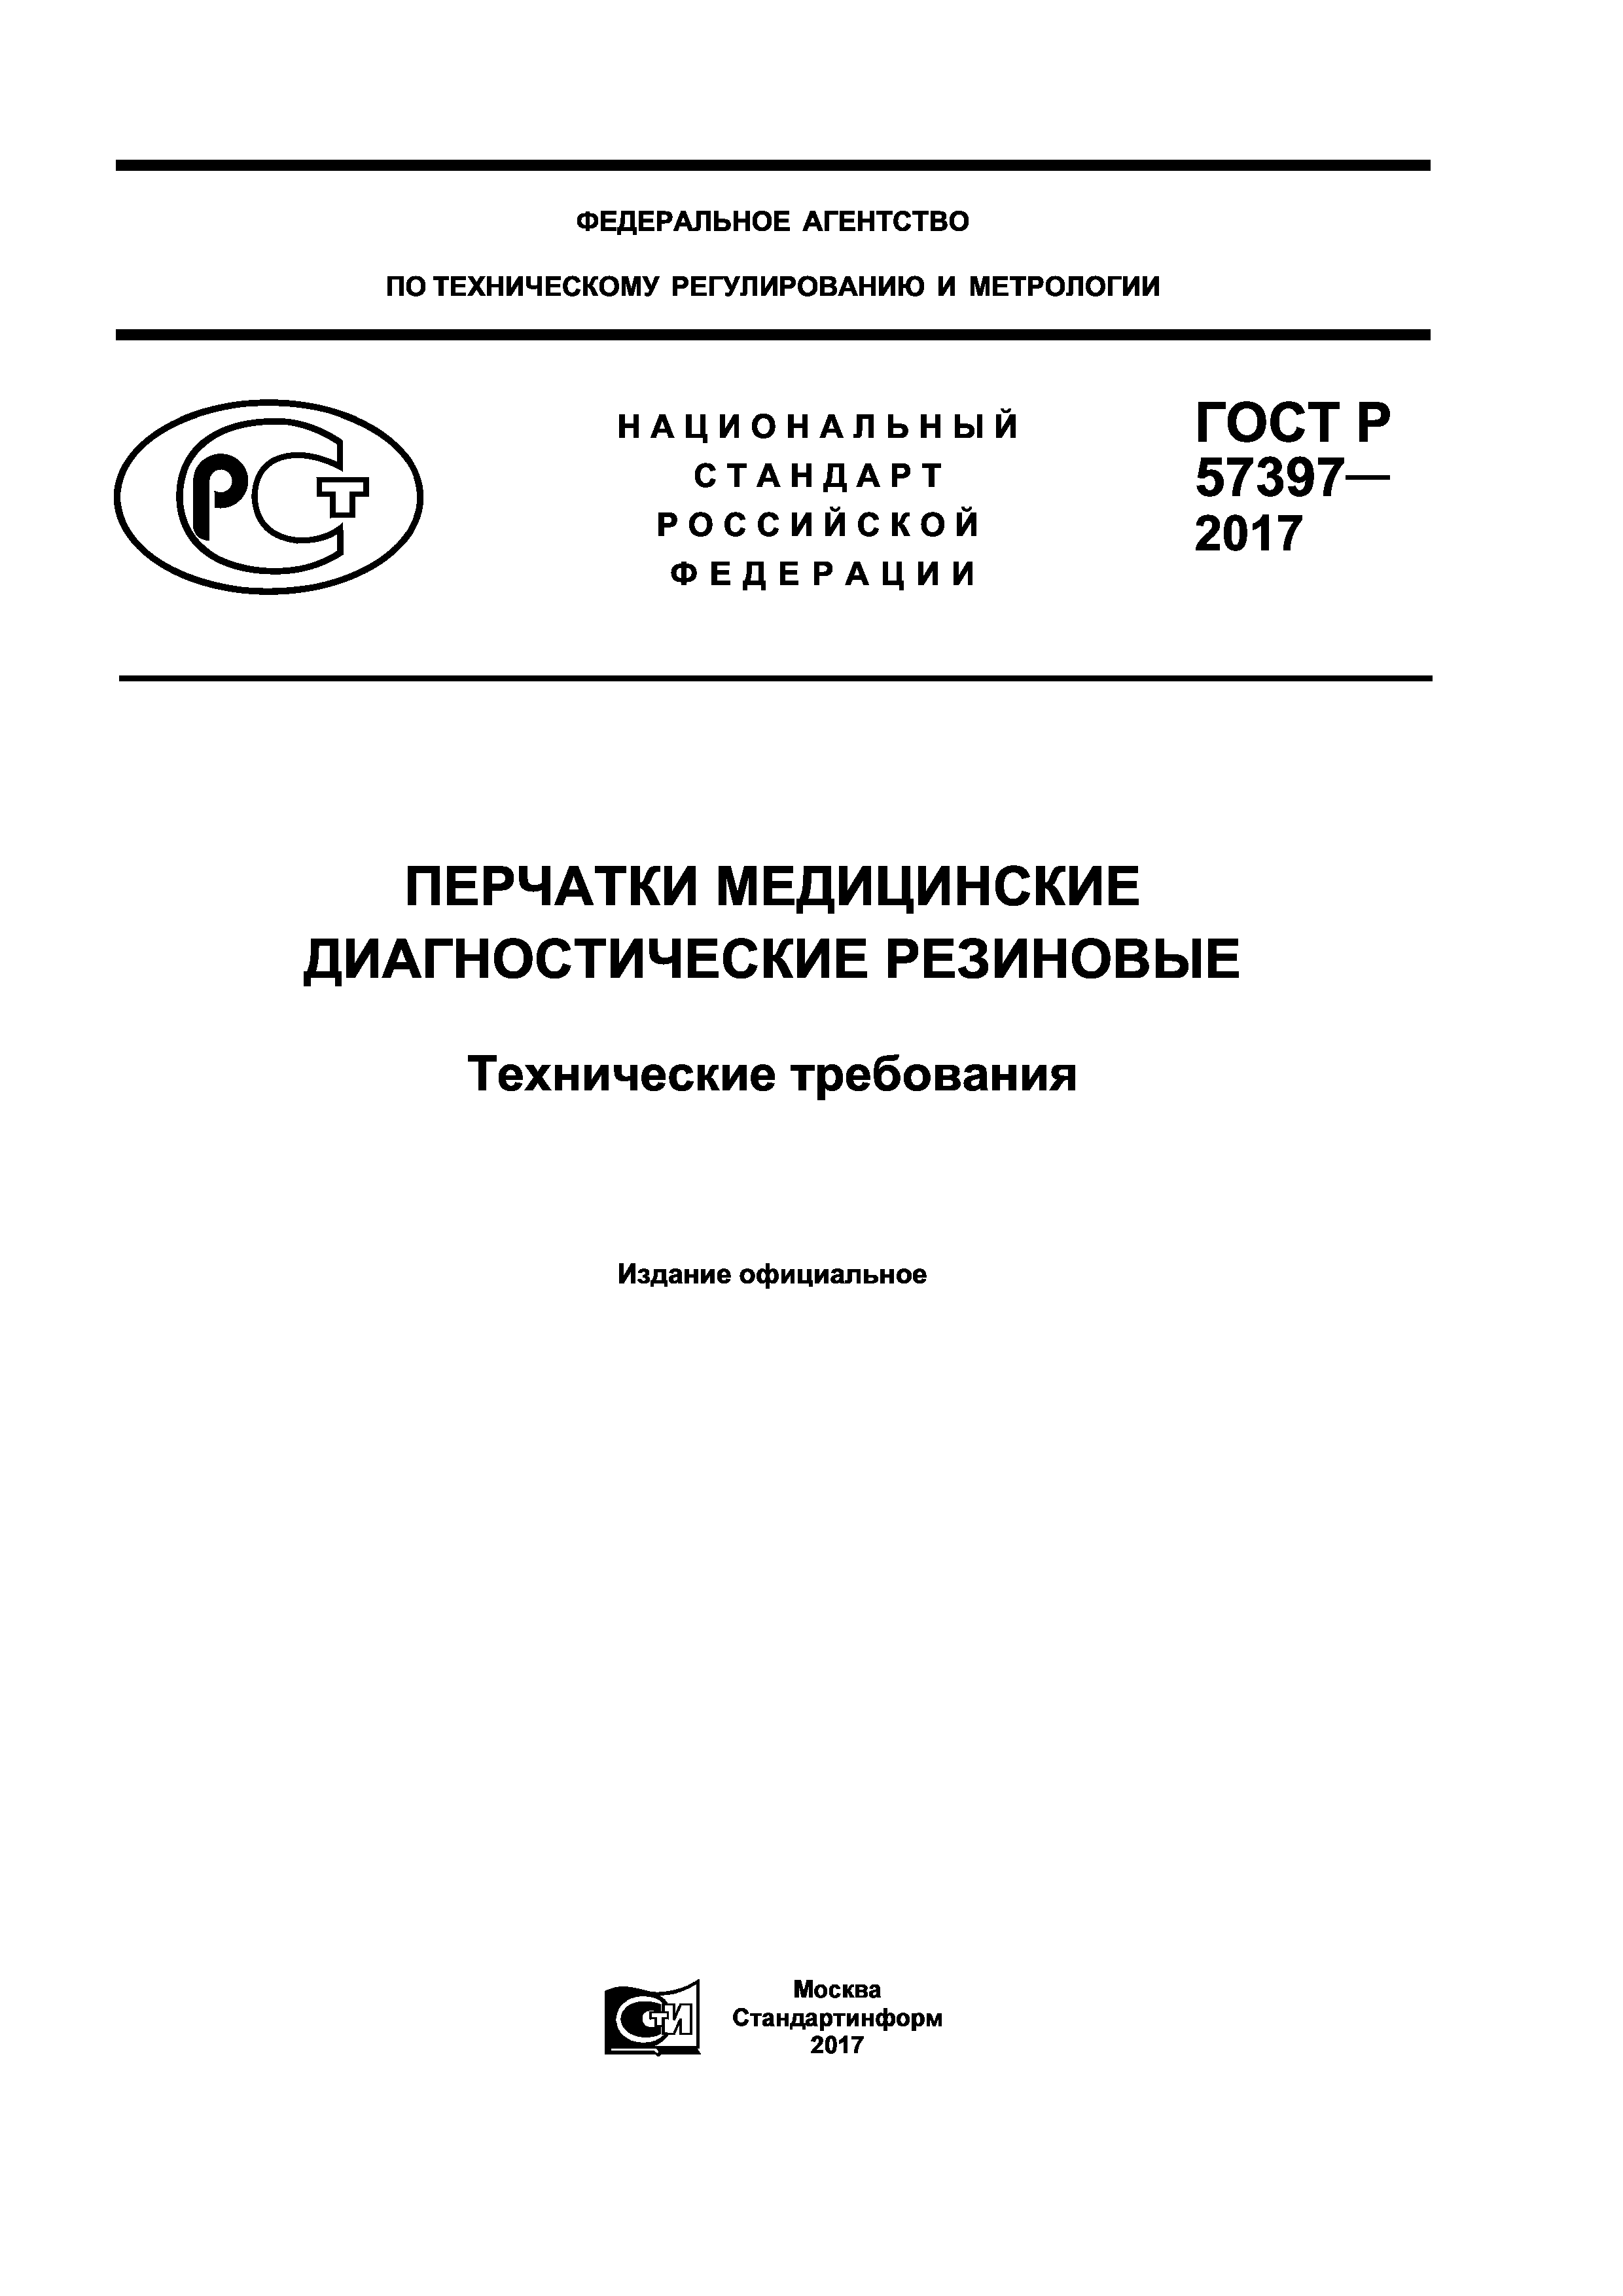 ГОСТ Р 57397-2017